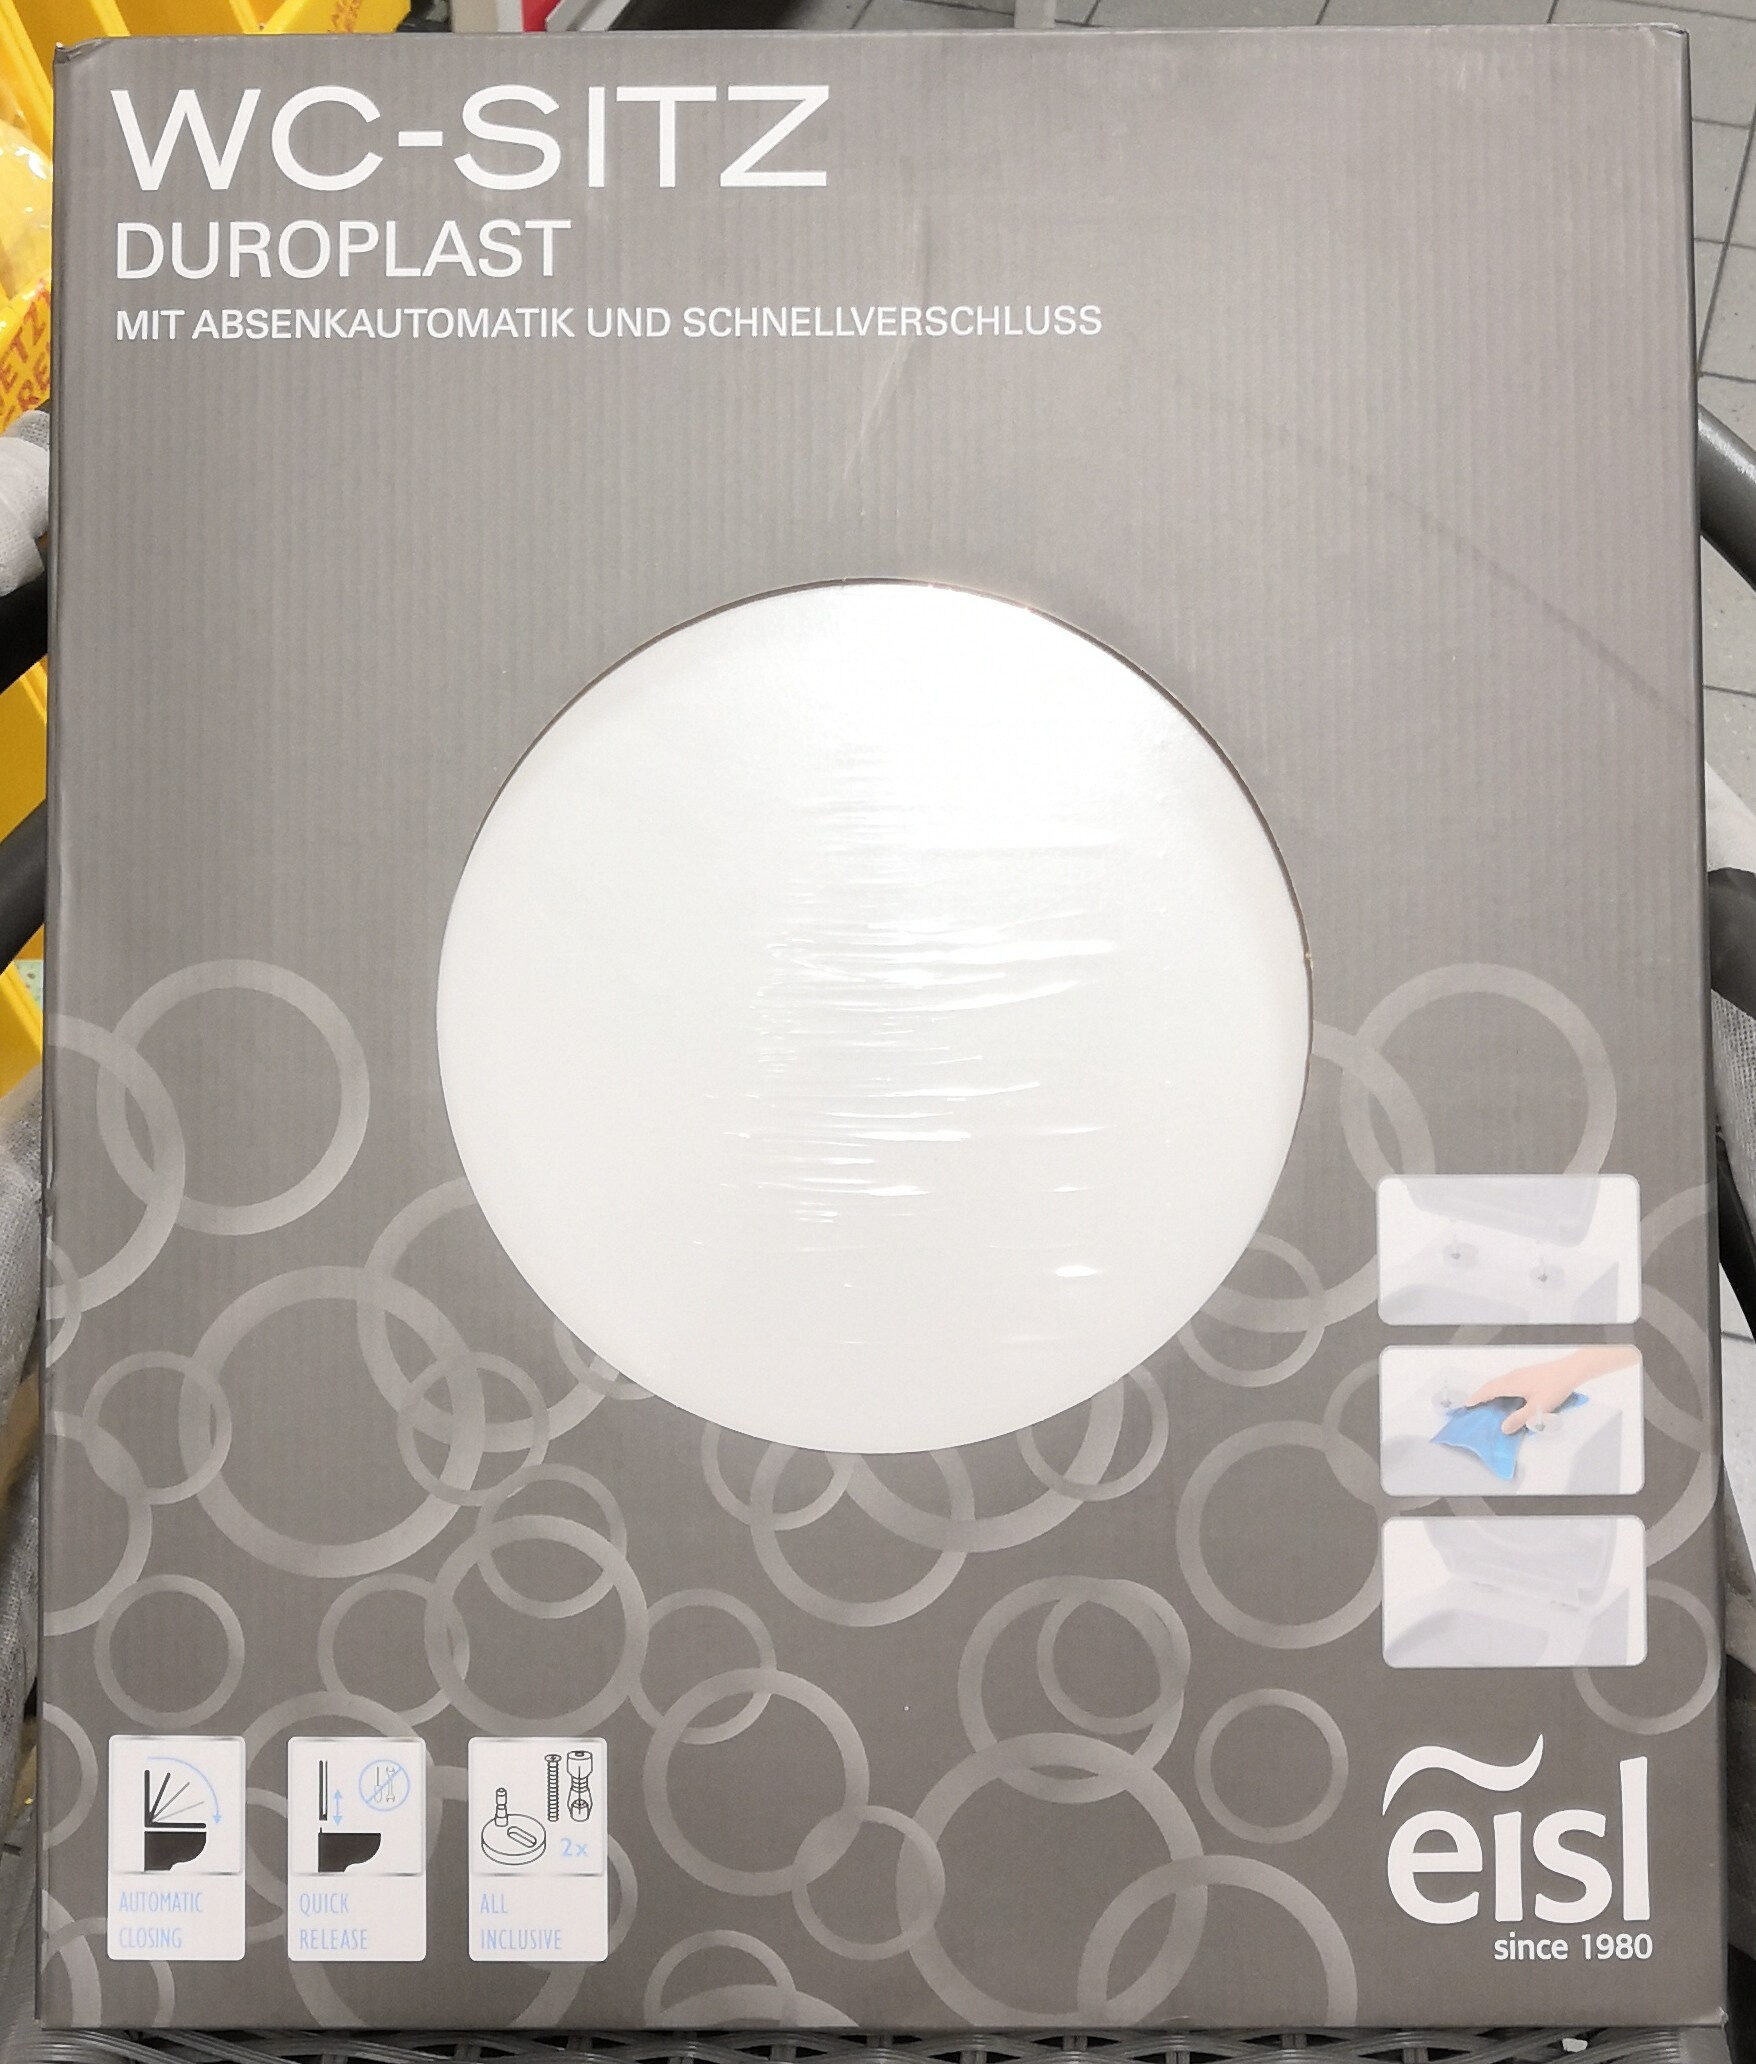 WC-Sitz Duroplast - Product - de